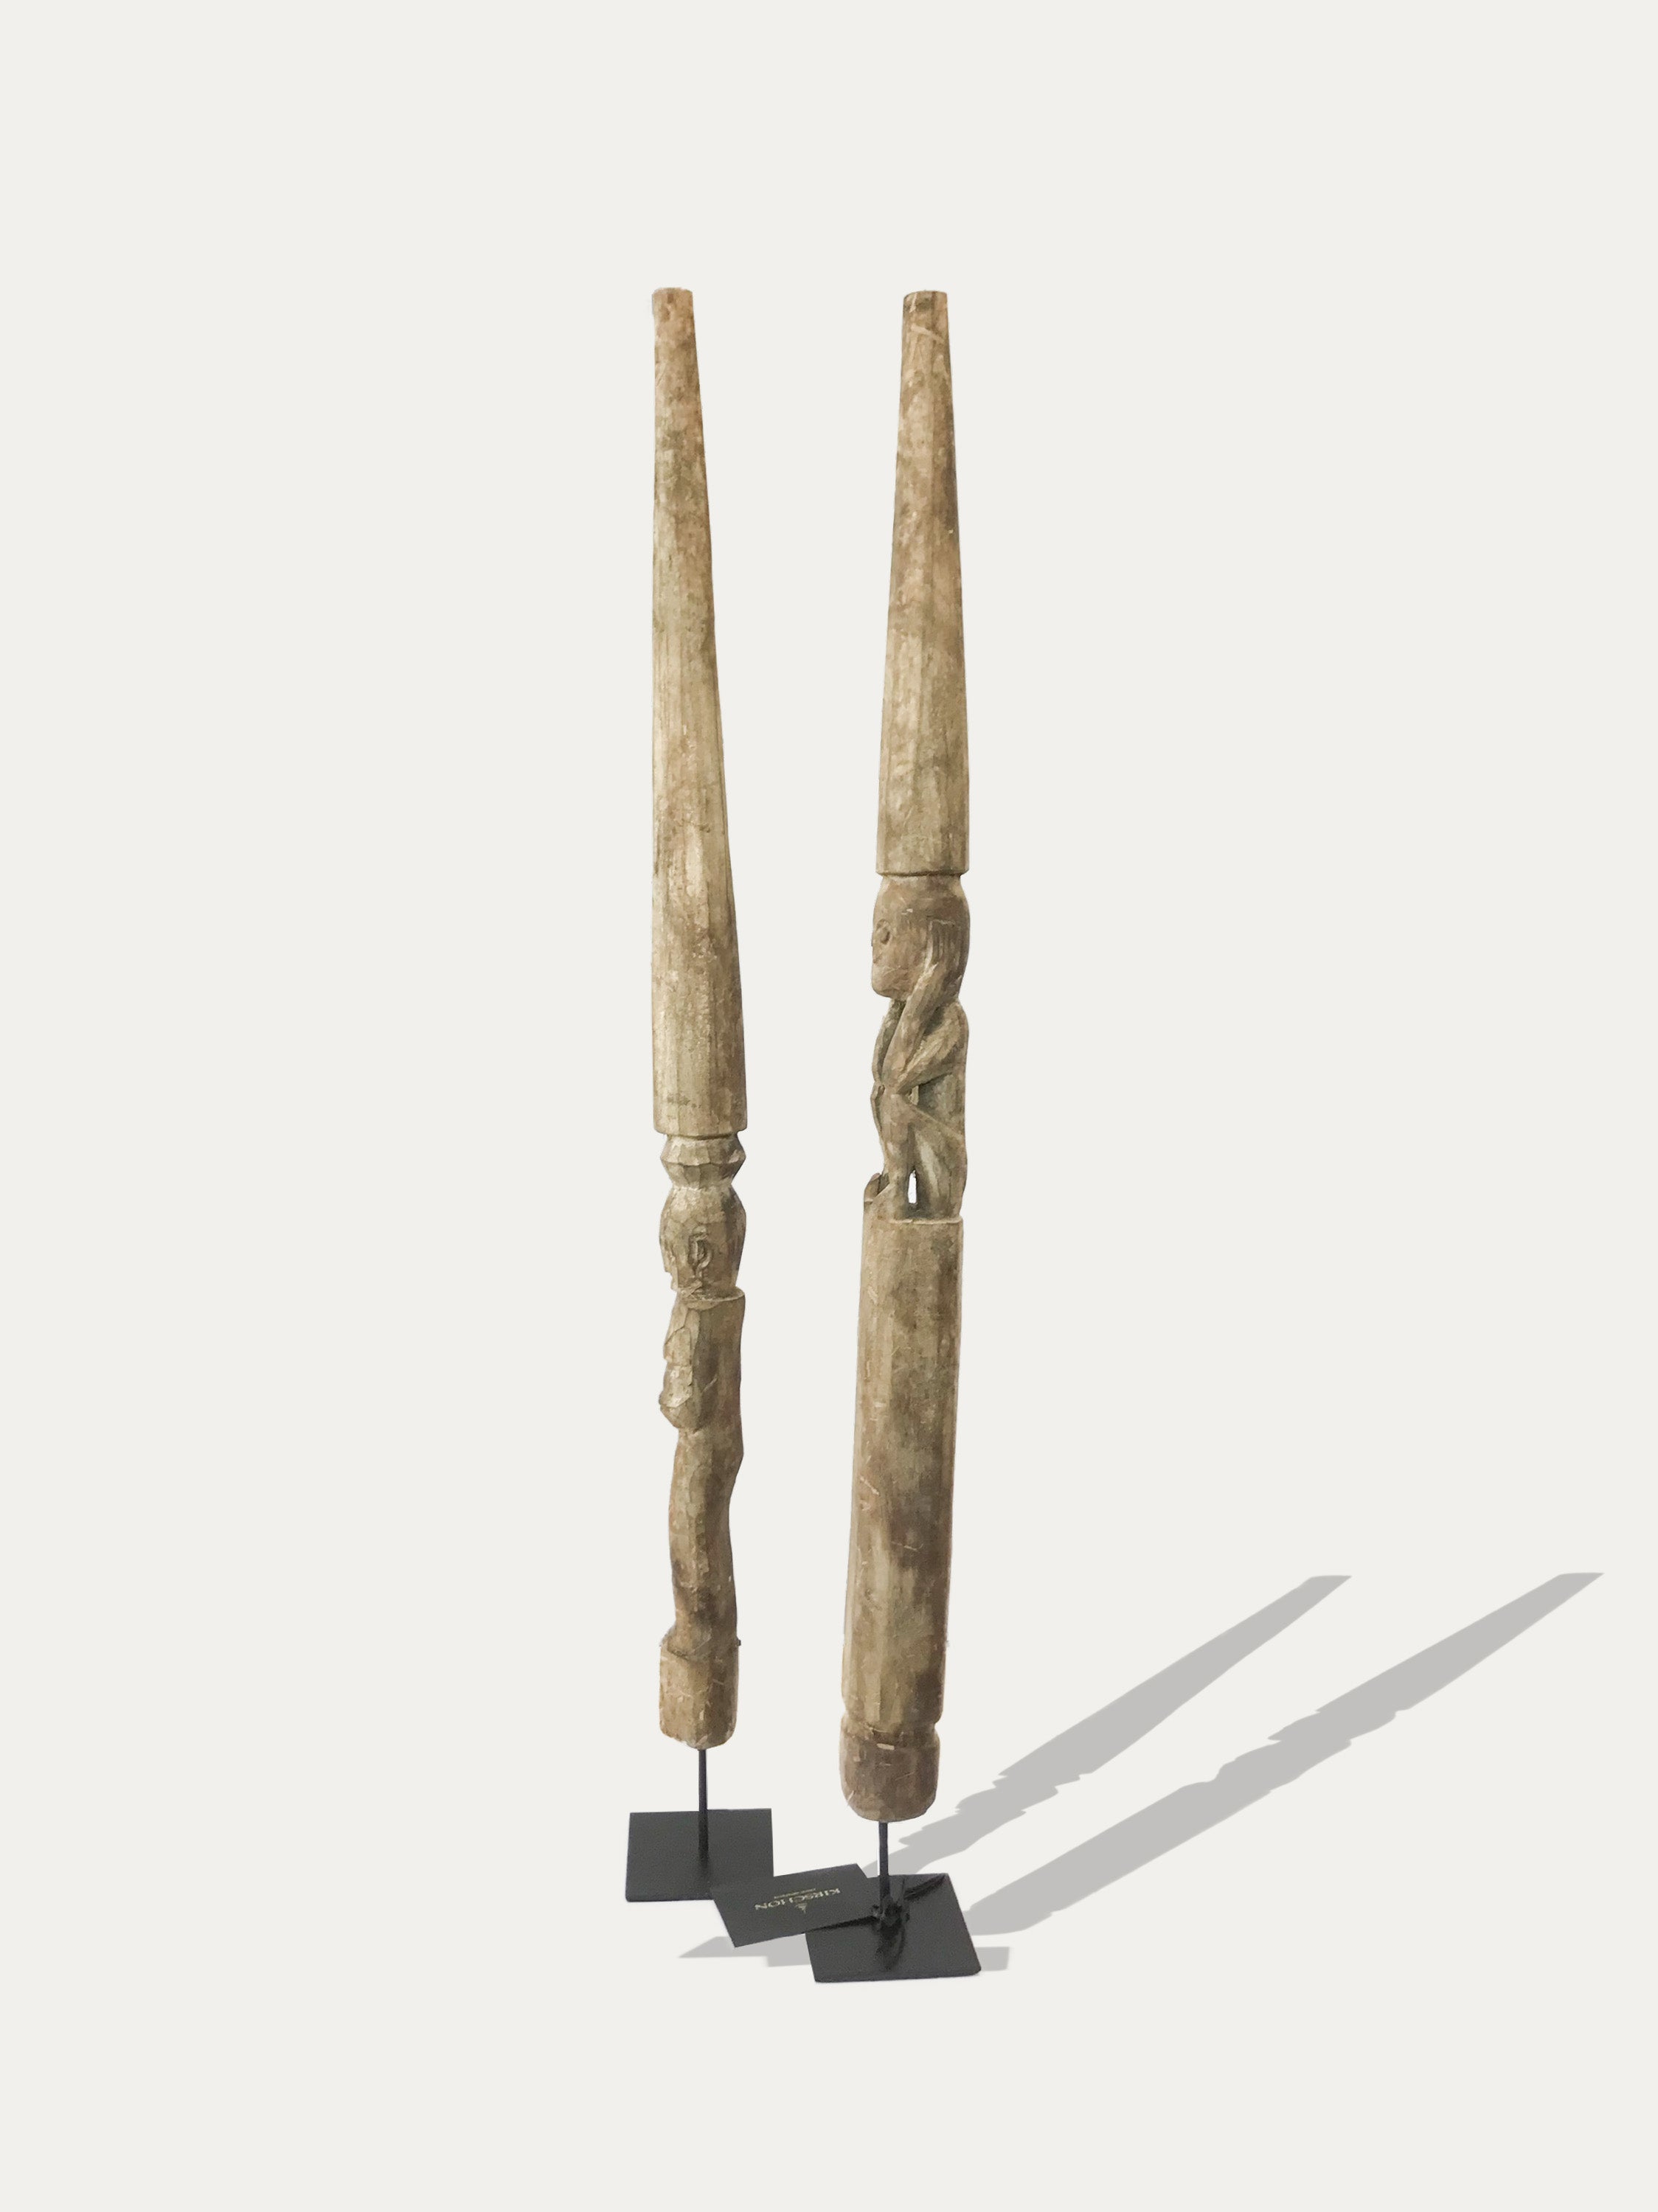 Wooden figures from Sumba - Asian Art from Kirschon